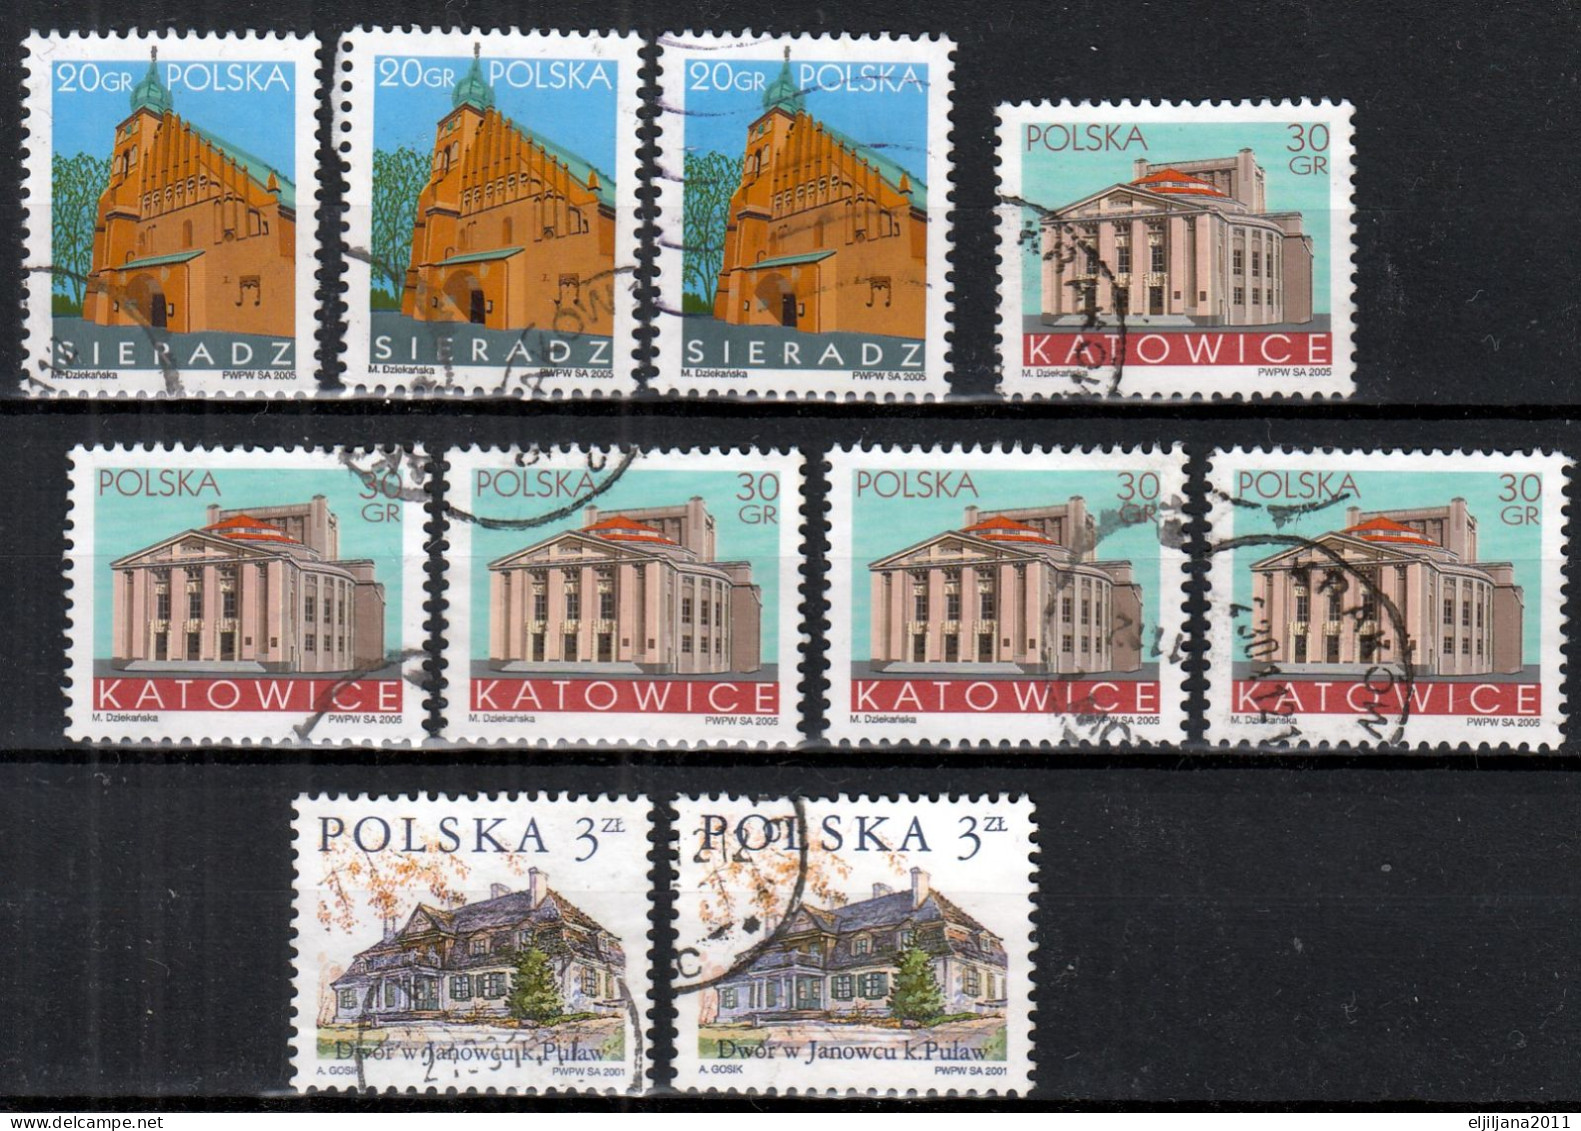 ⁕ Poland / Polska 1998 - 2005 ⁕ Castles - Cities Mi.3693,3882,3890,4199,4212 ⁕ 19v Used - Usati